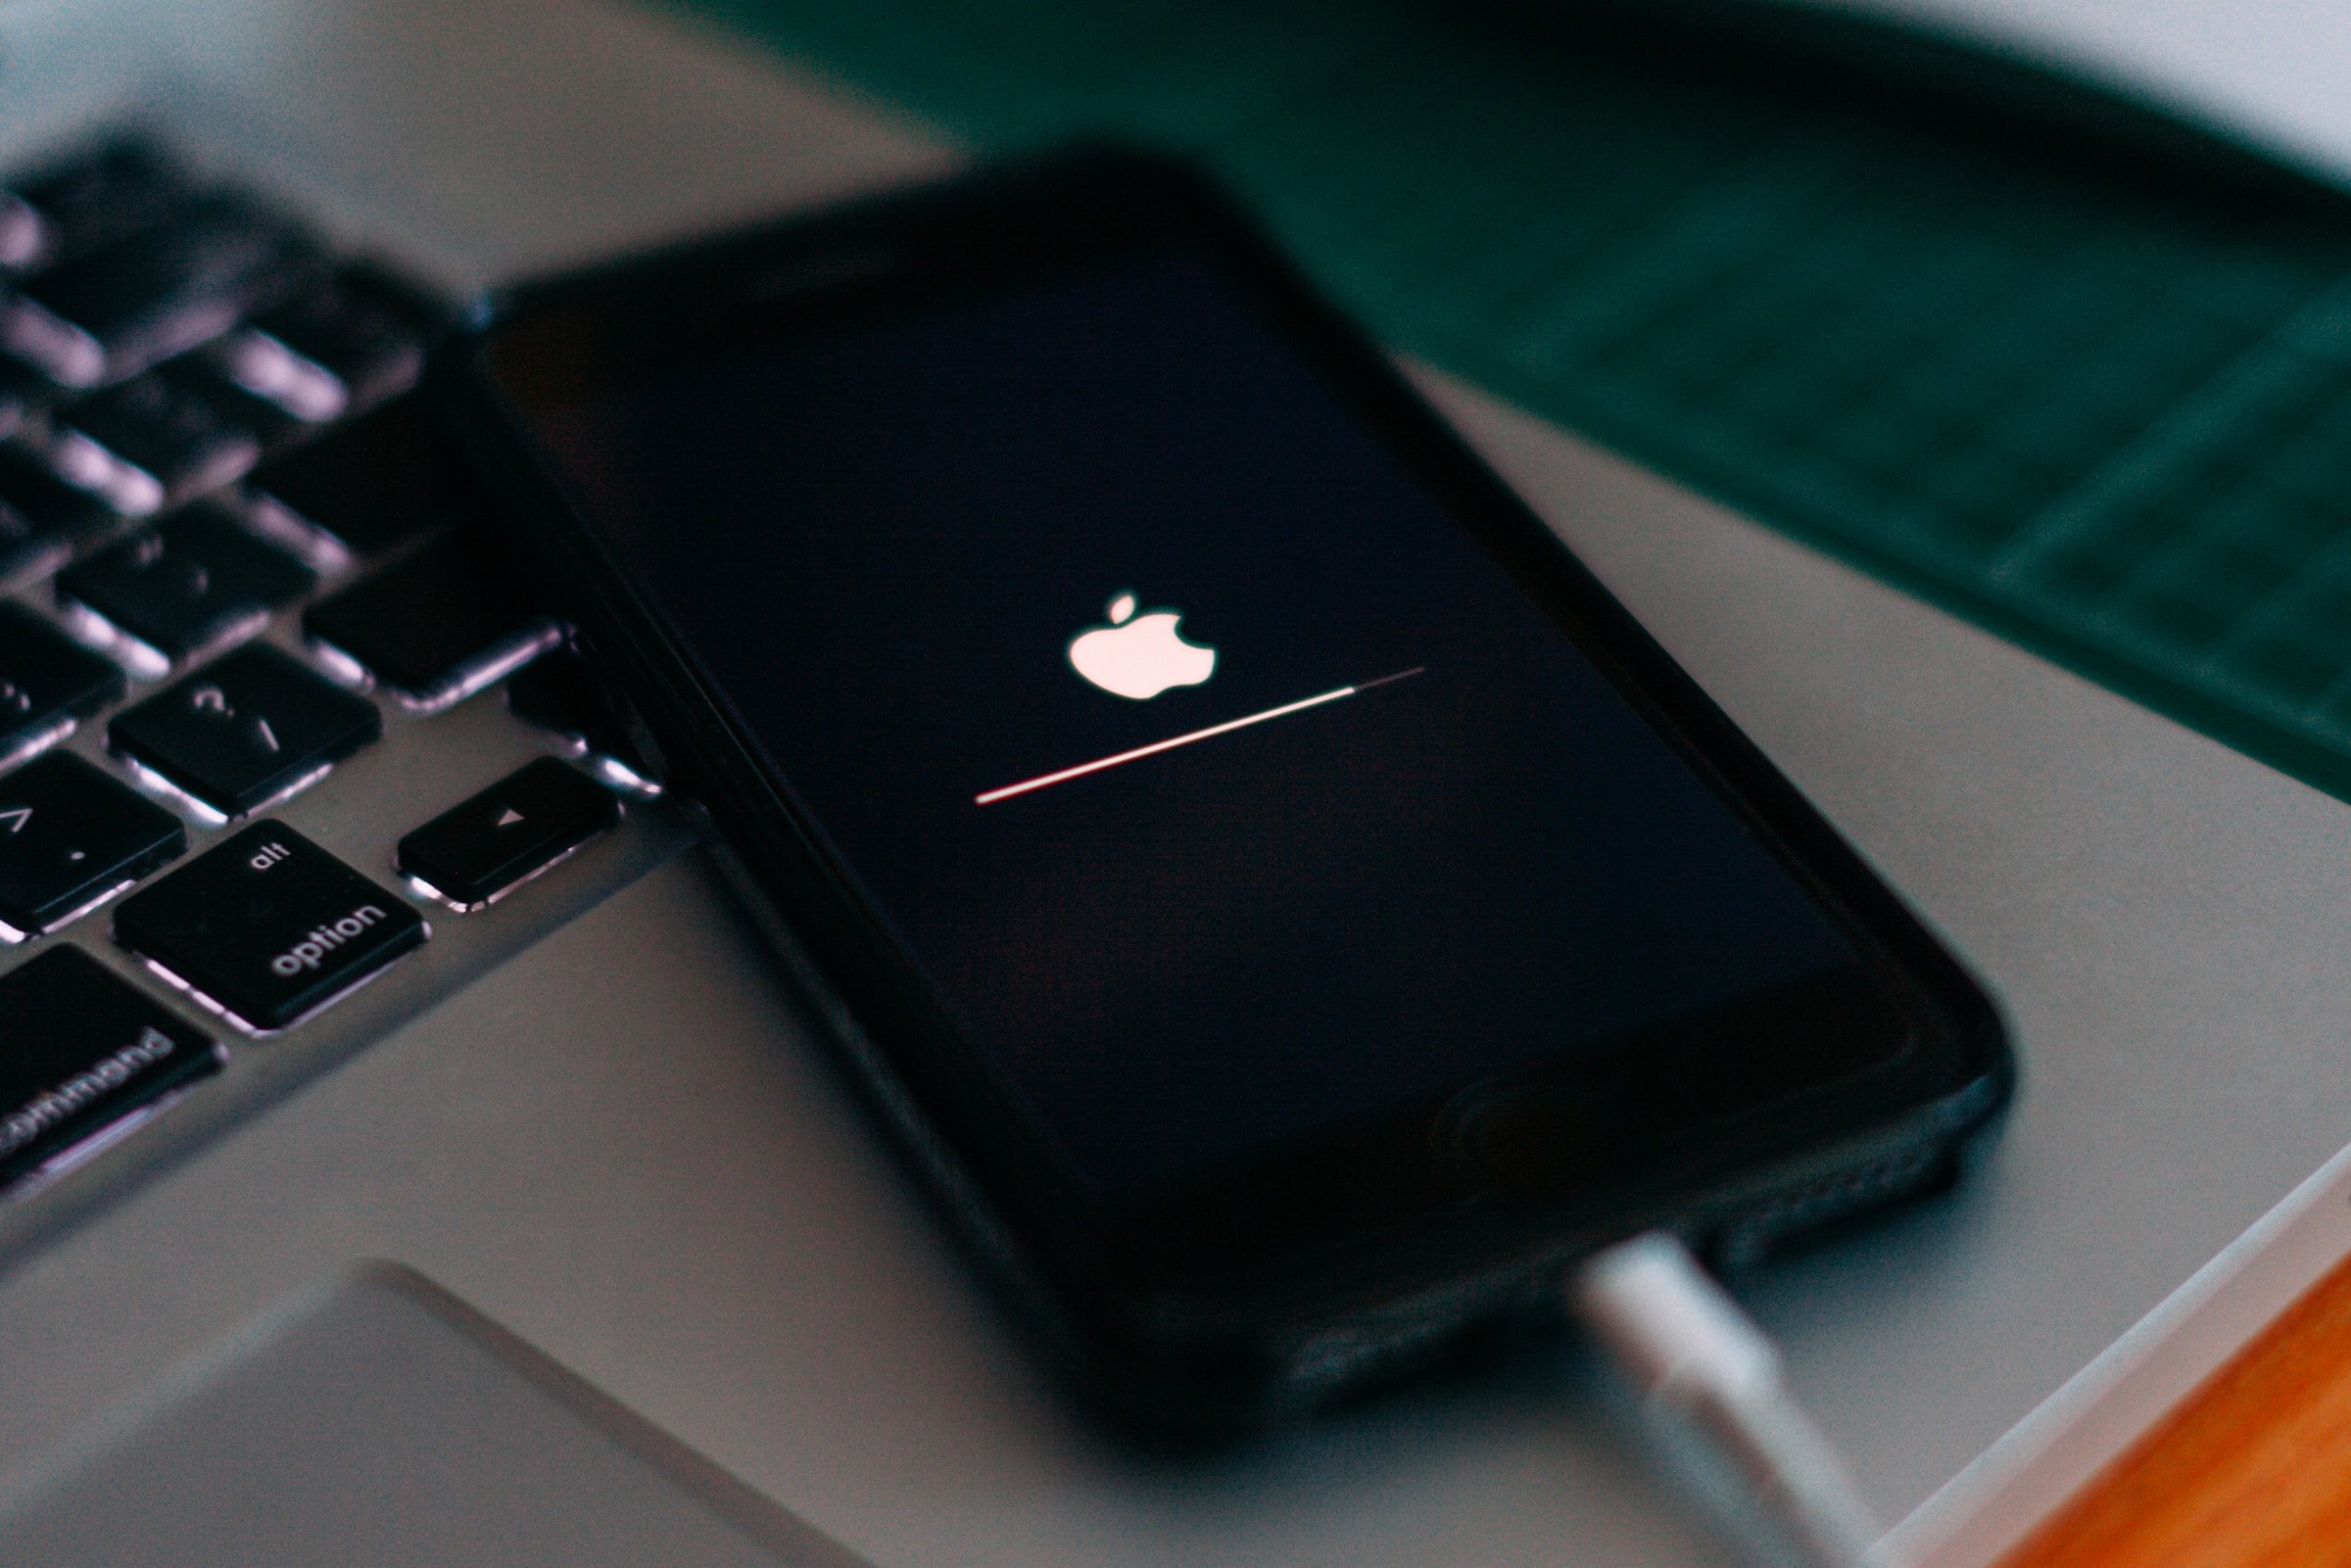 Iphone keeps blinking Apple logo, Iphone flashing Apple logo FIX